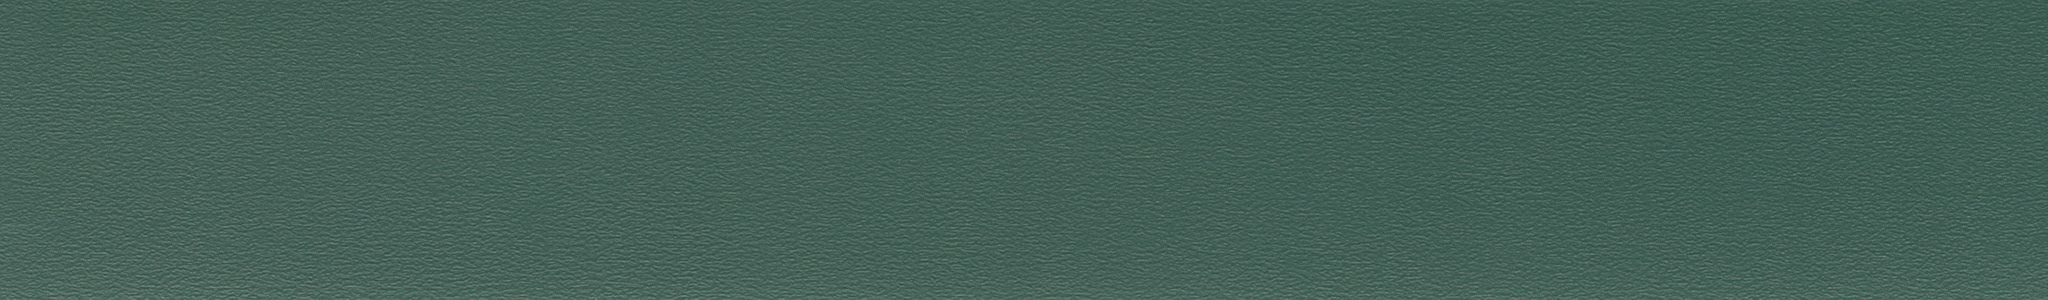 ABS K520 SU Dark Emerald 42x1mm HU 160520